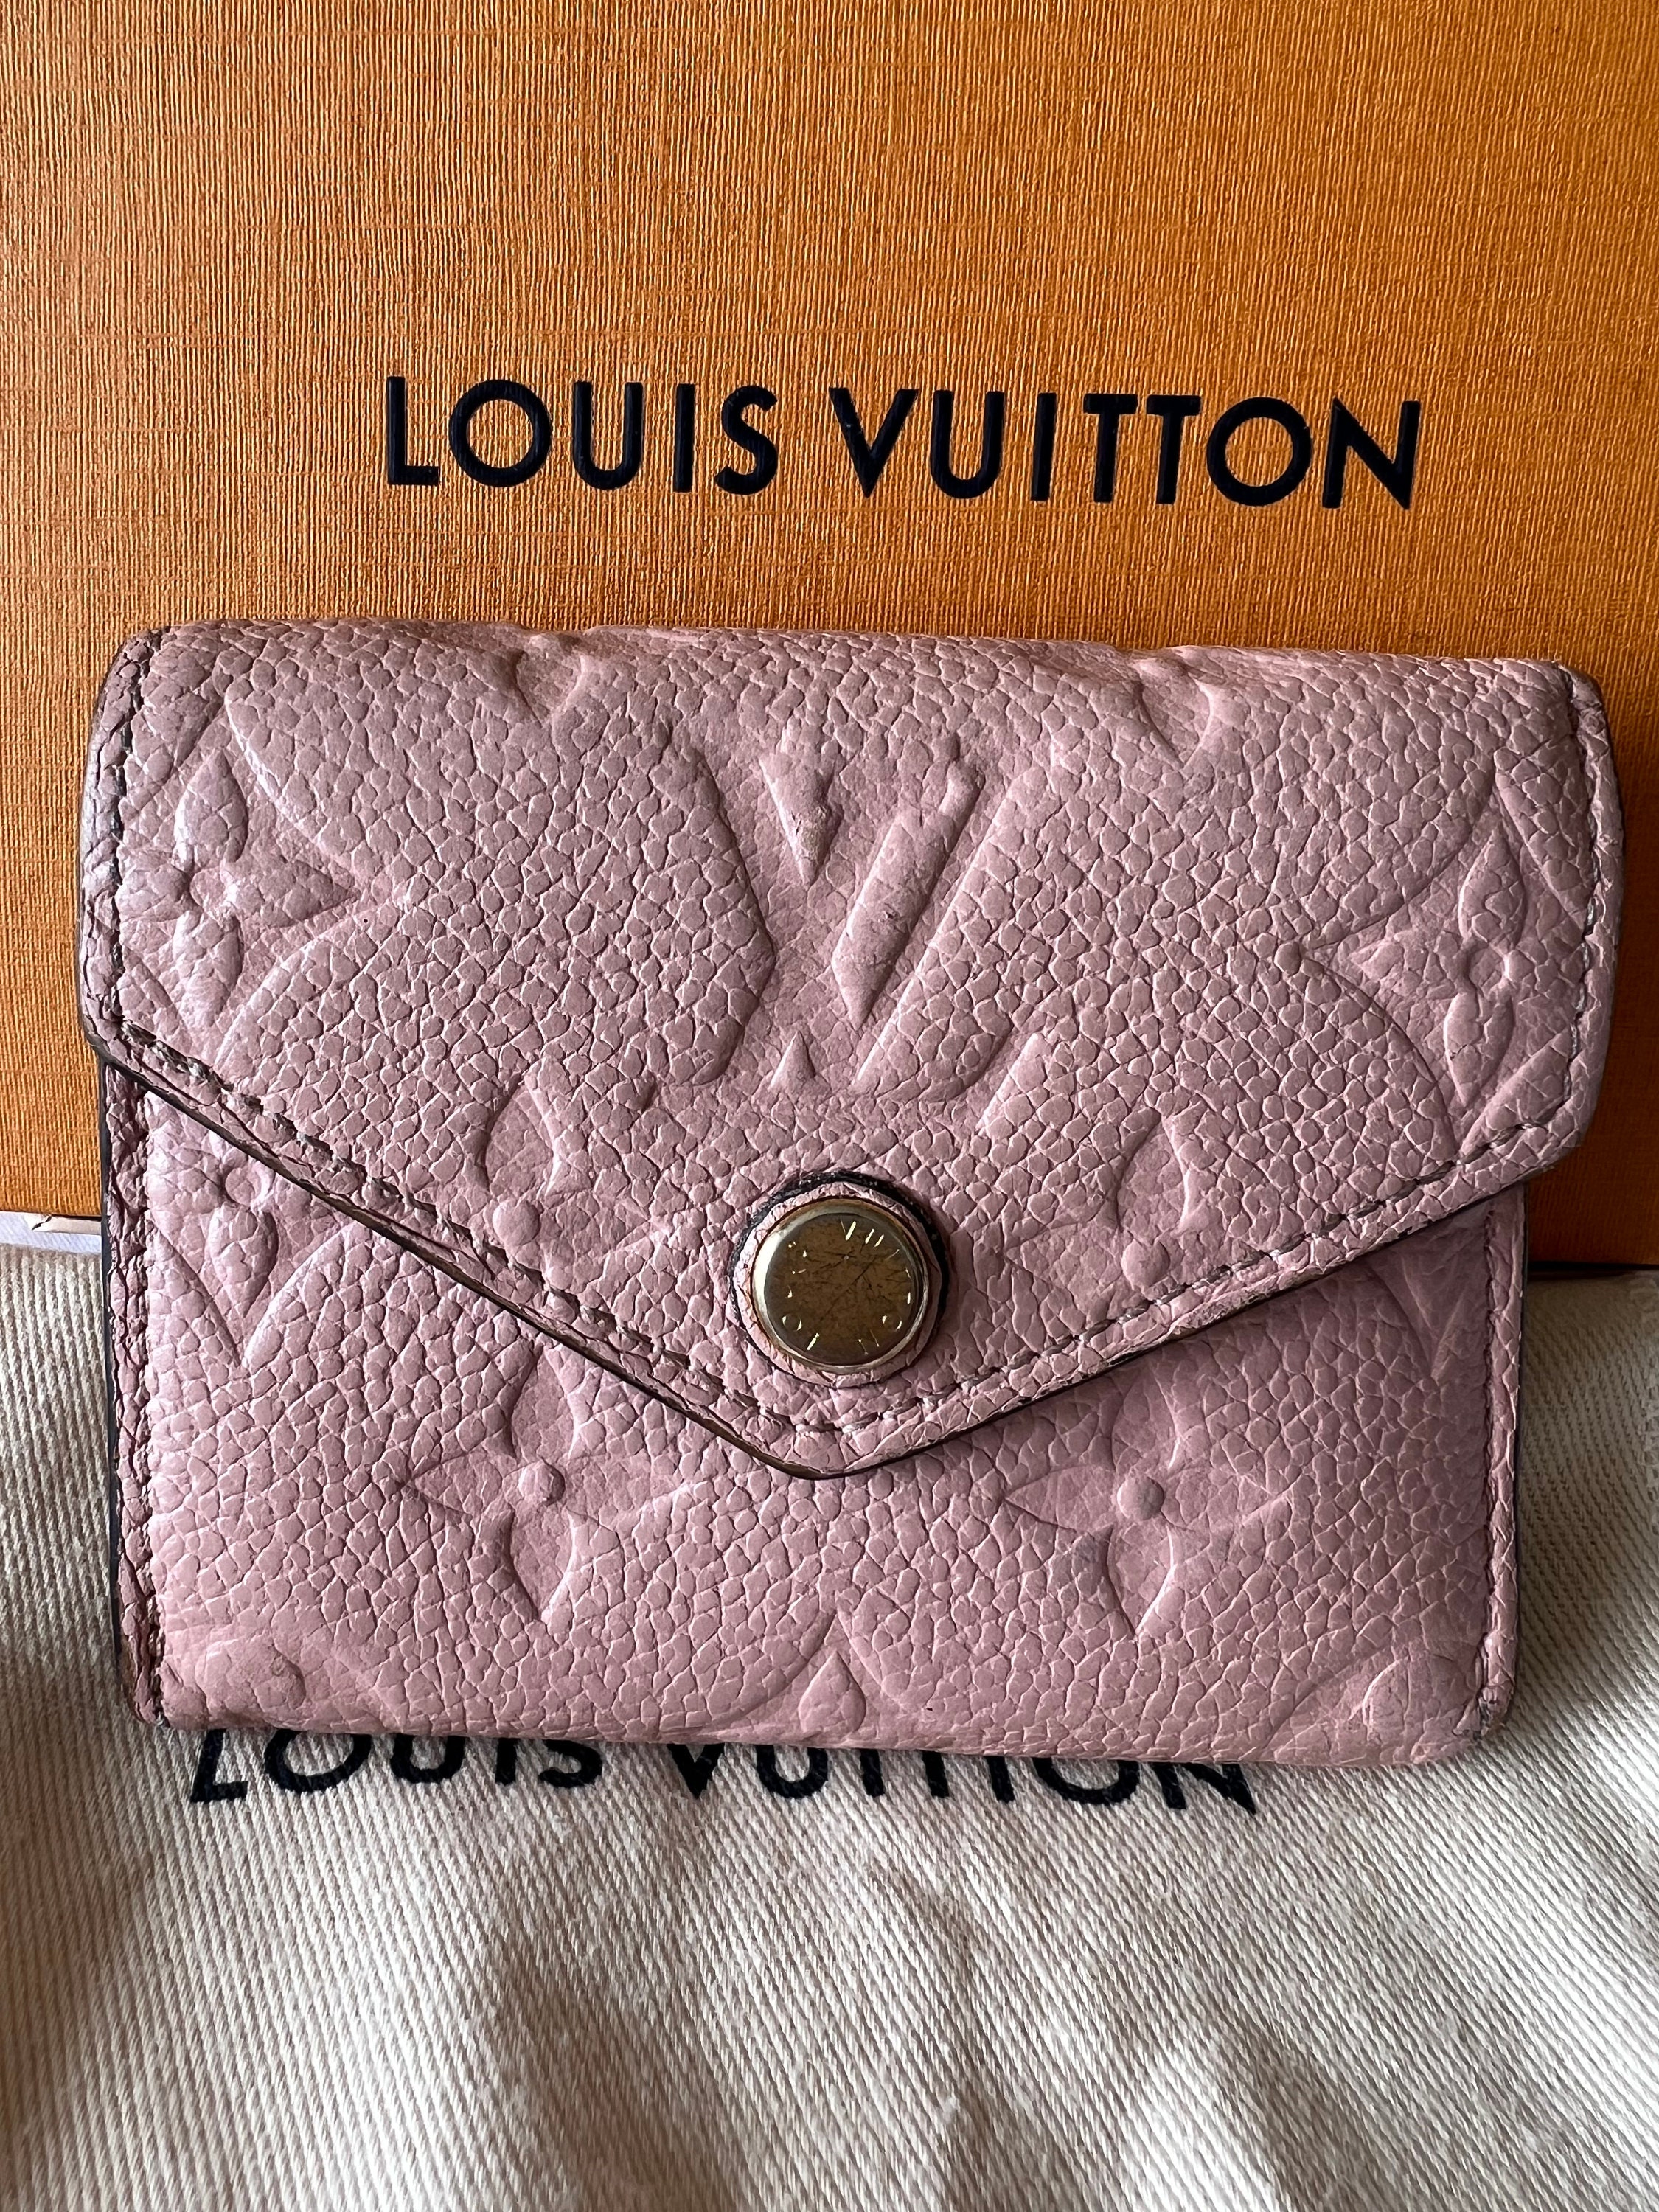 Louis Vuitton Wallet Mens -  UK